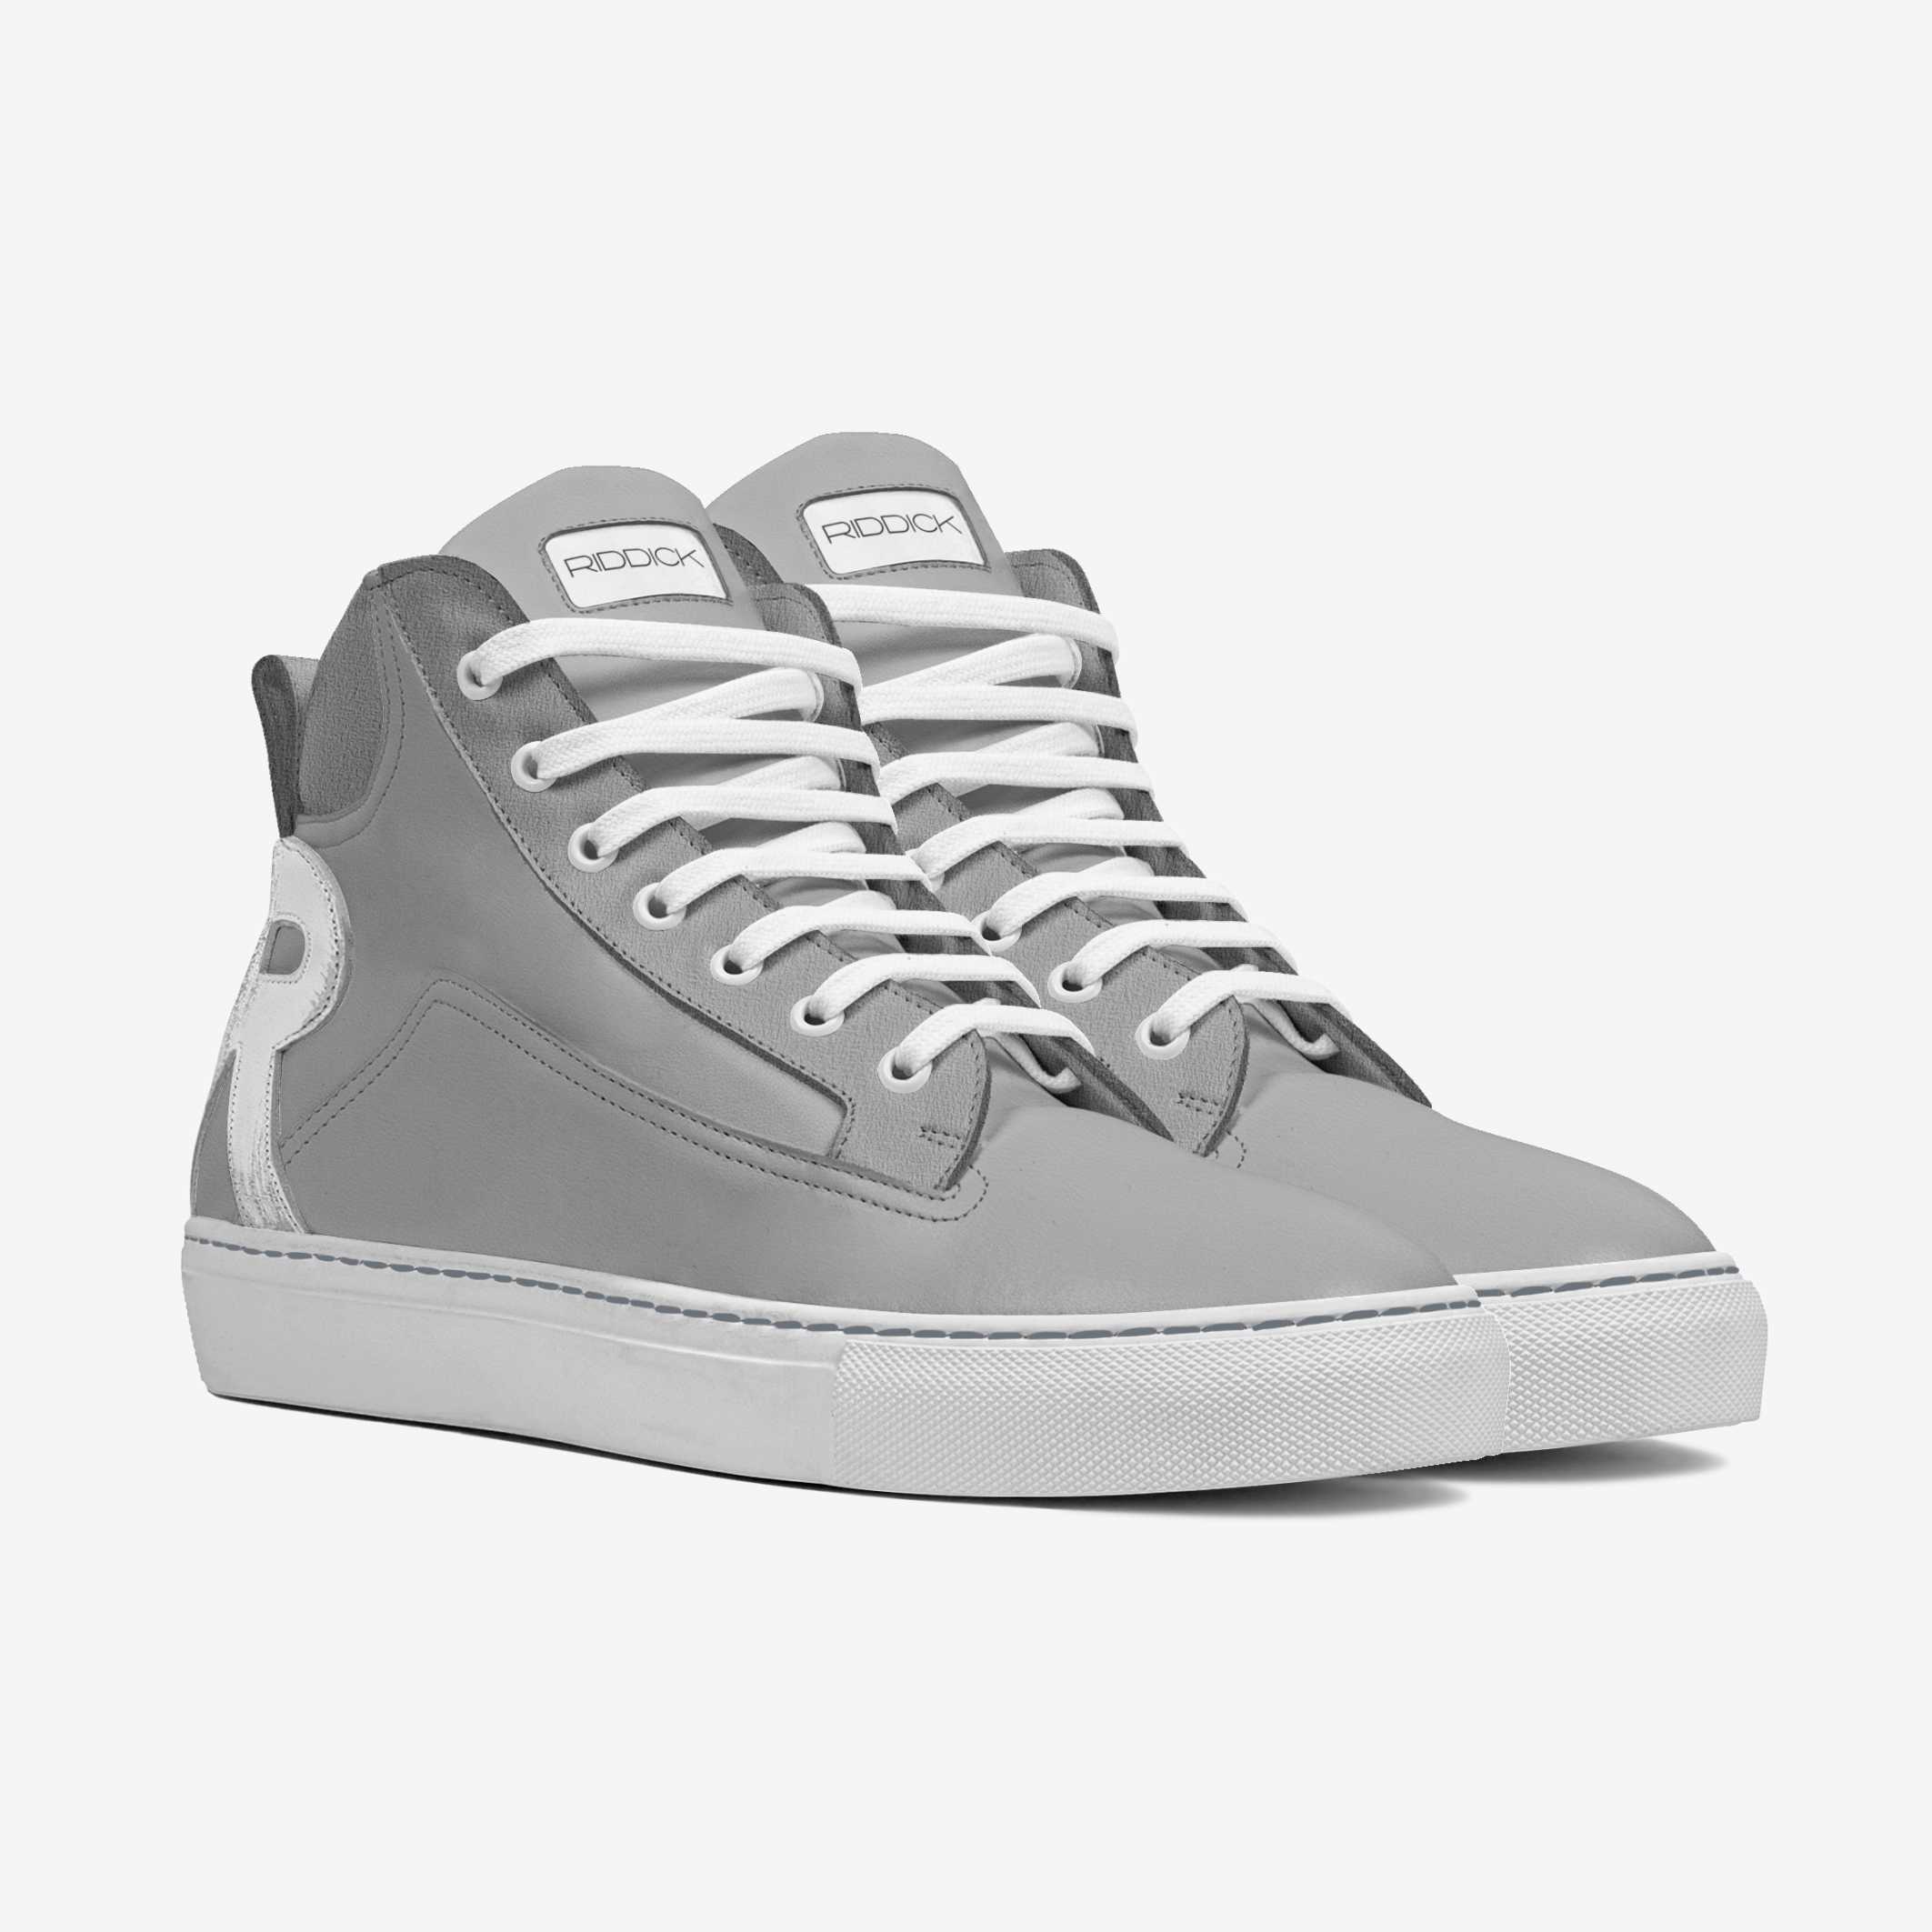 O.G. RIDDICK [Grey Leather] - Riddick Shoes Shoe Riddick Shoes   